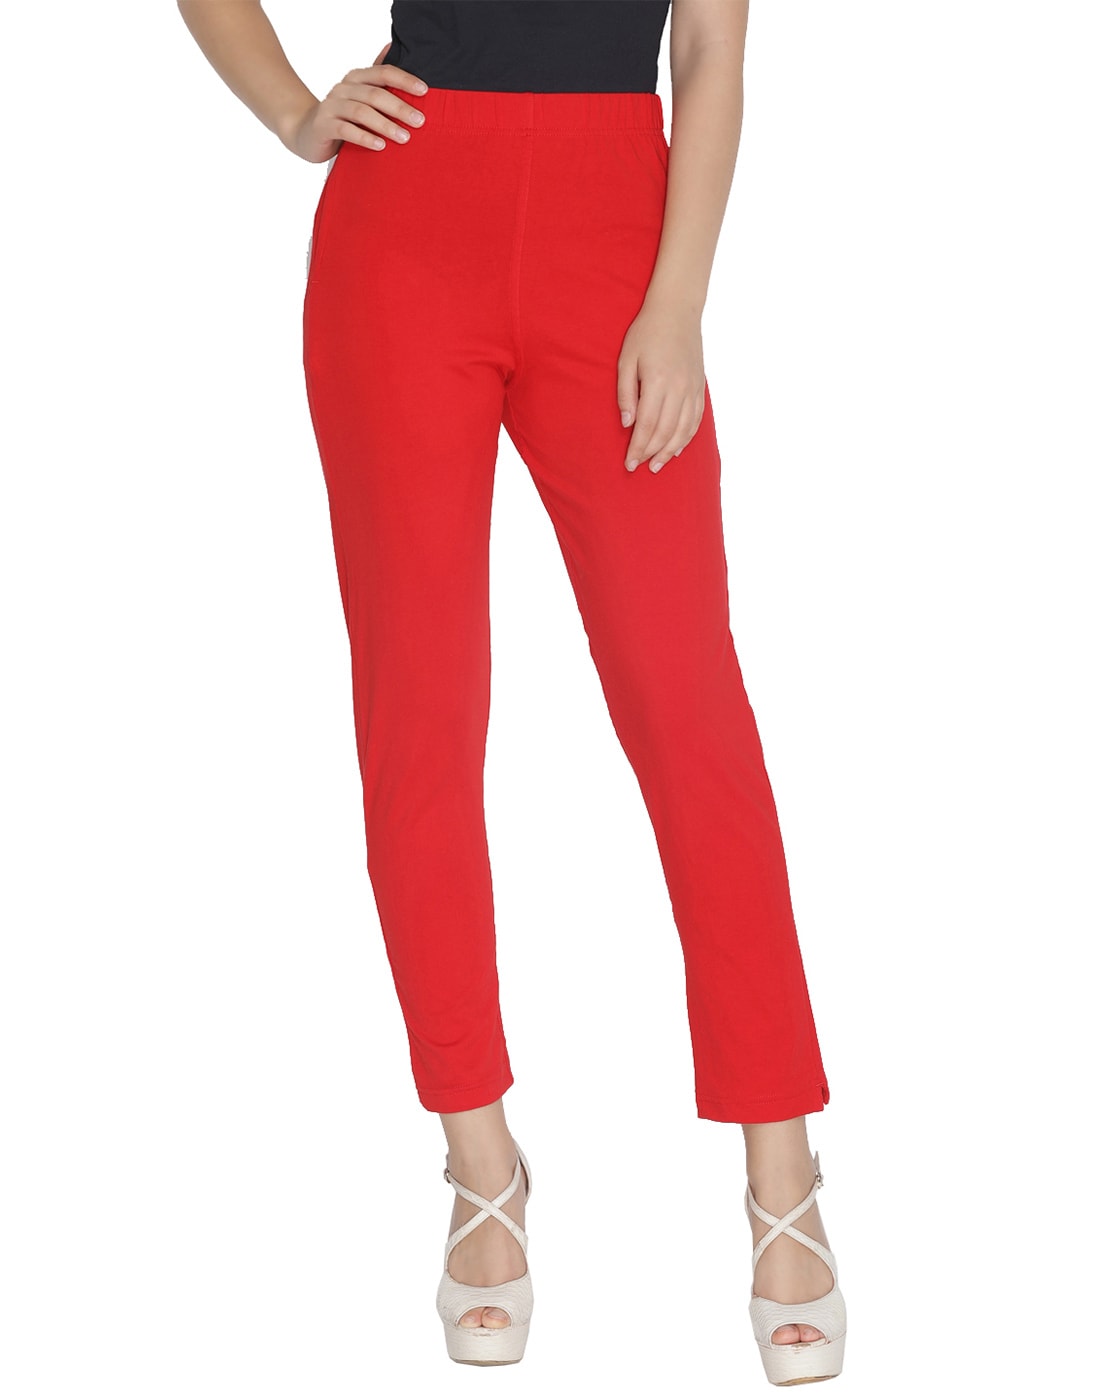 Red trouser women - Plus size - Straight leg 2 back pockets - Belore Slims